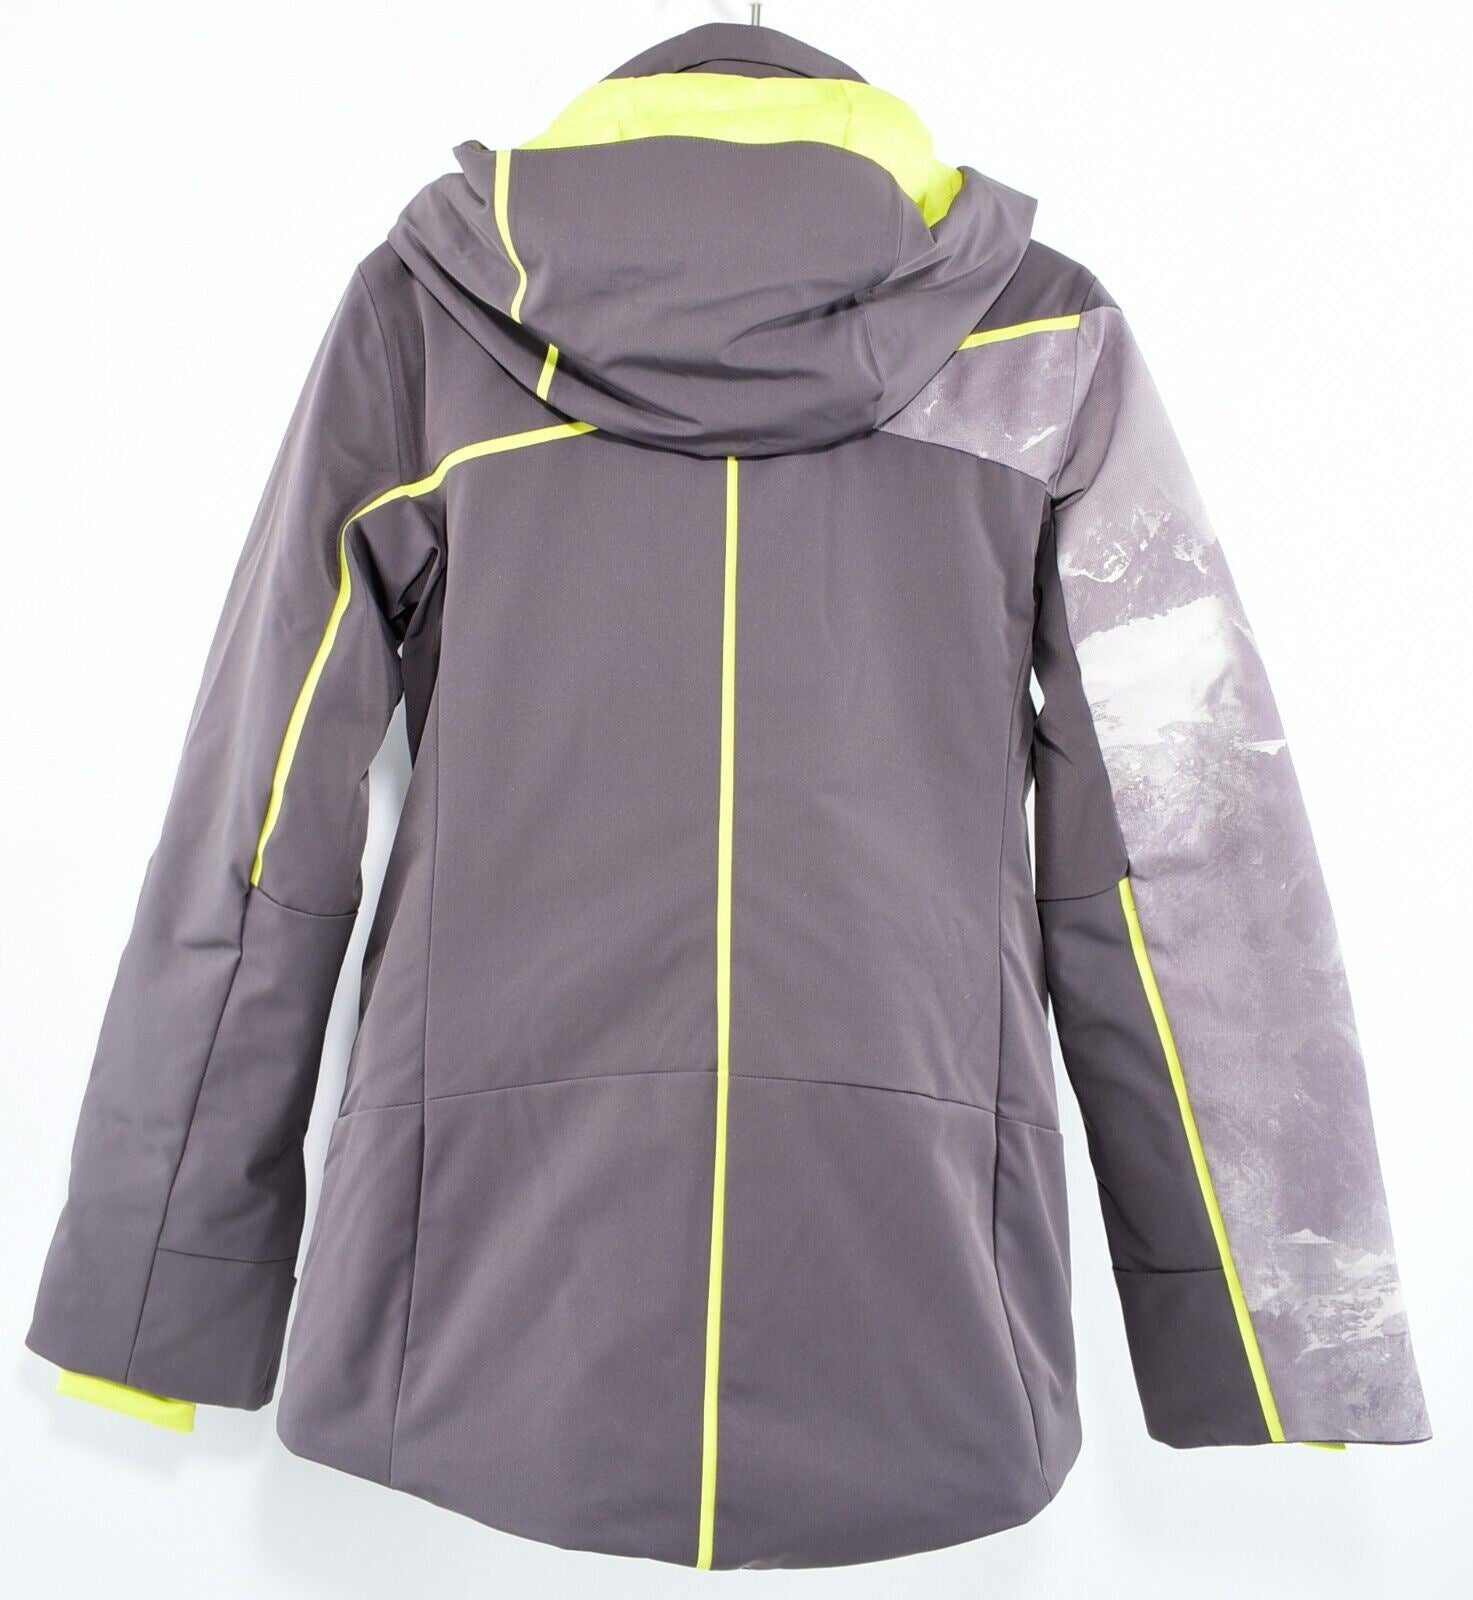 SPYDER Womens EMPRESS Ski Jacket, Grey/Multicoloured, size UK 6